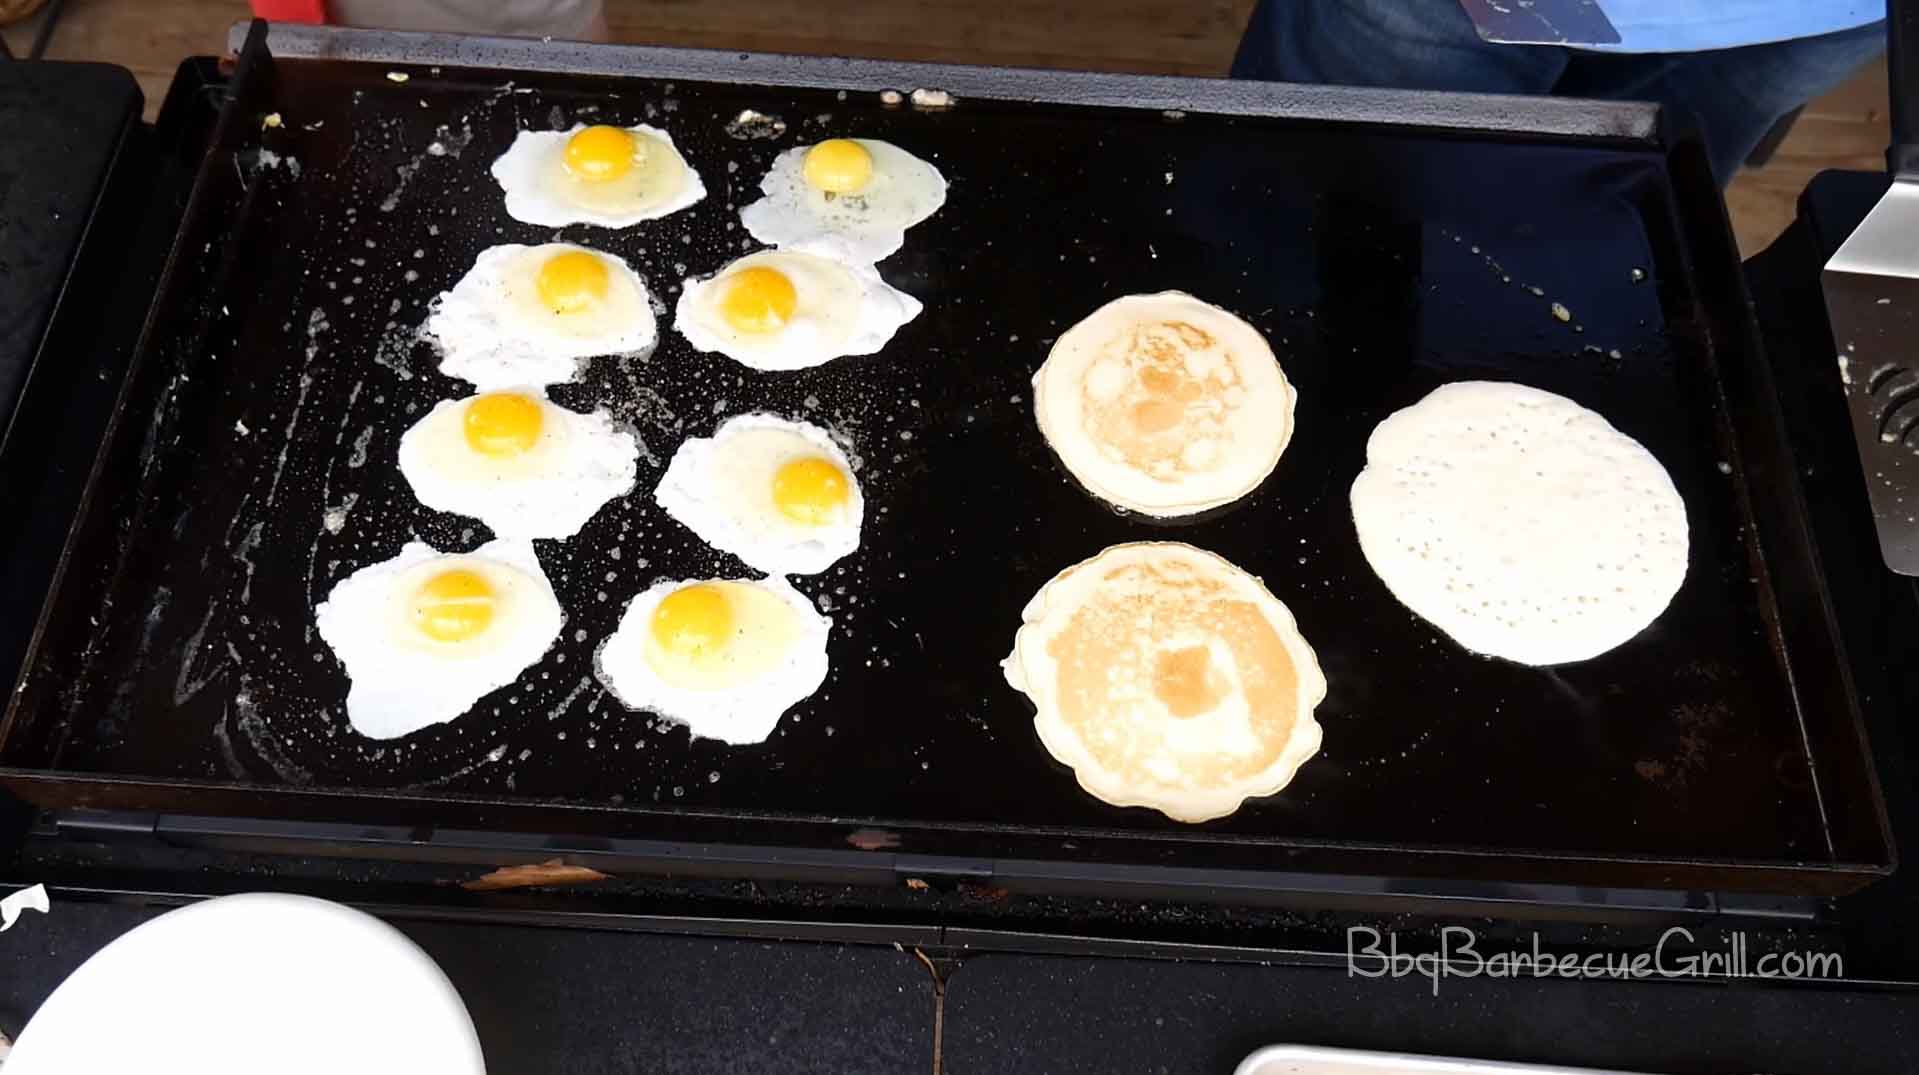 Griddle vs frying pan